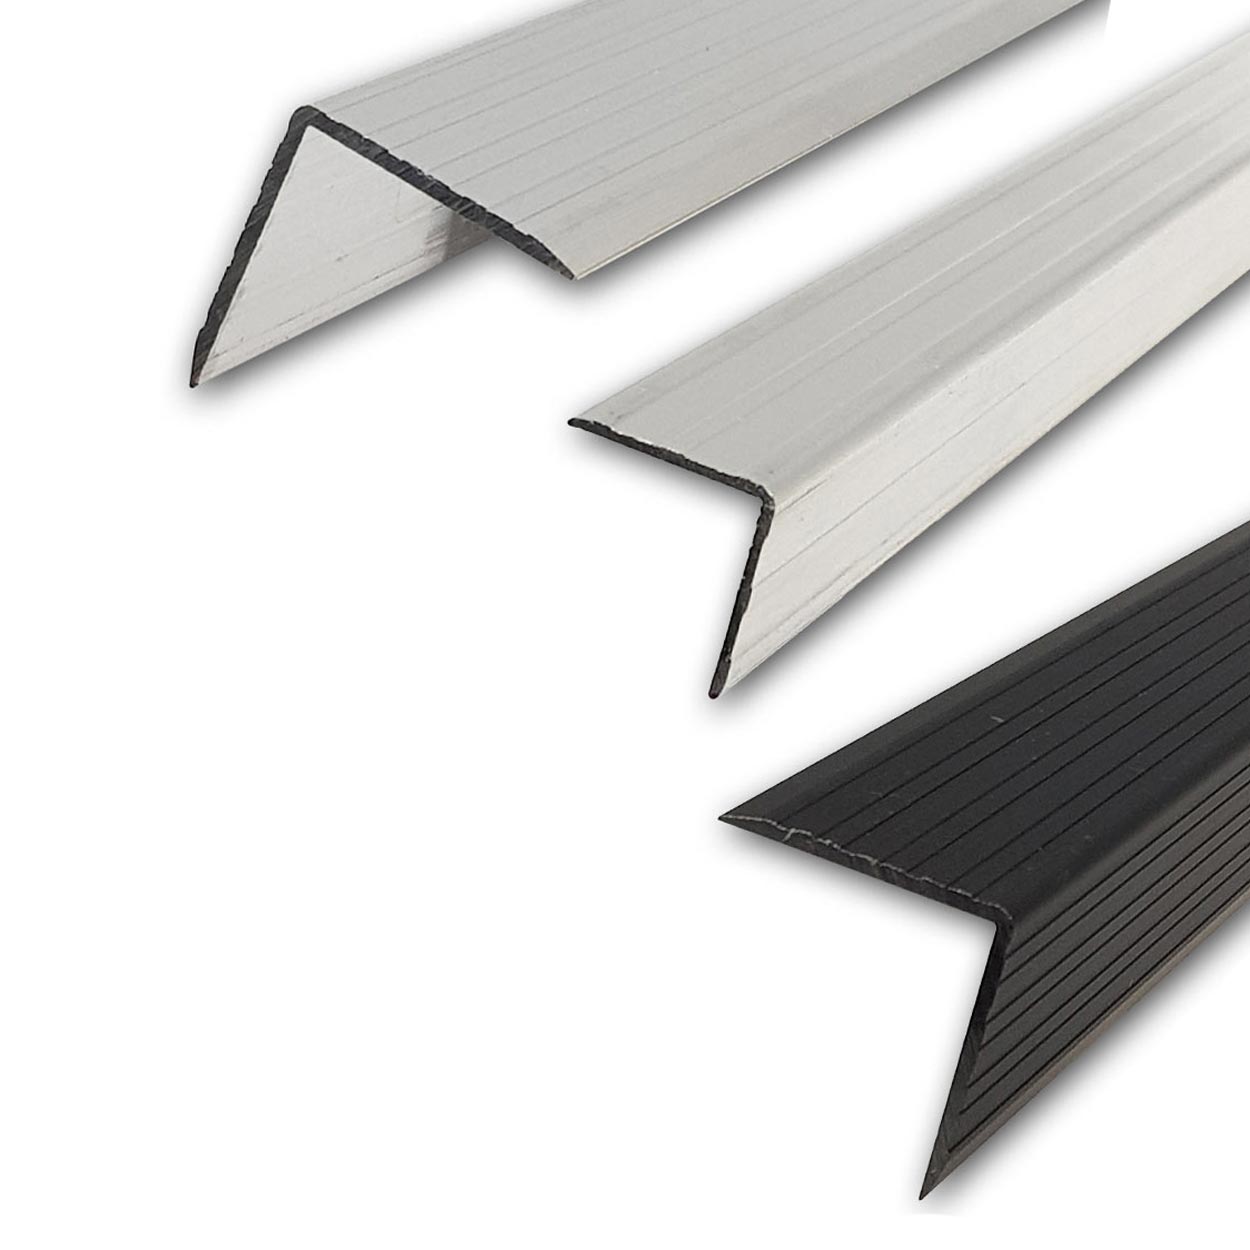 Profilé aluminium cornière sur mesure service de découpe| Eurocase